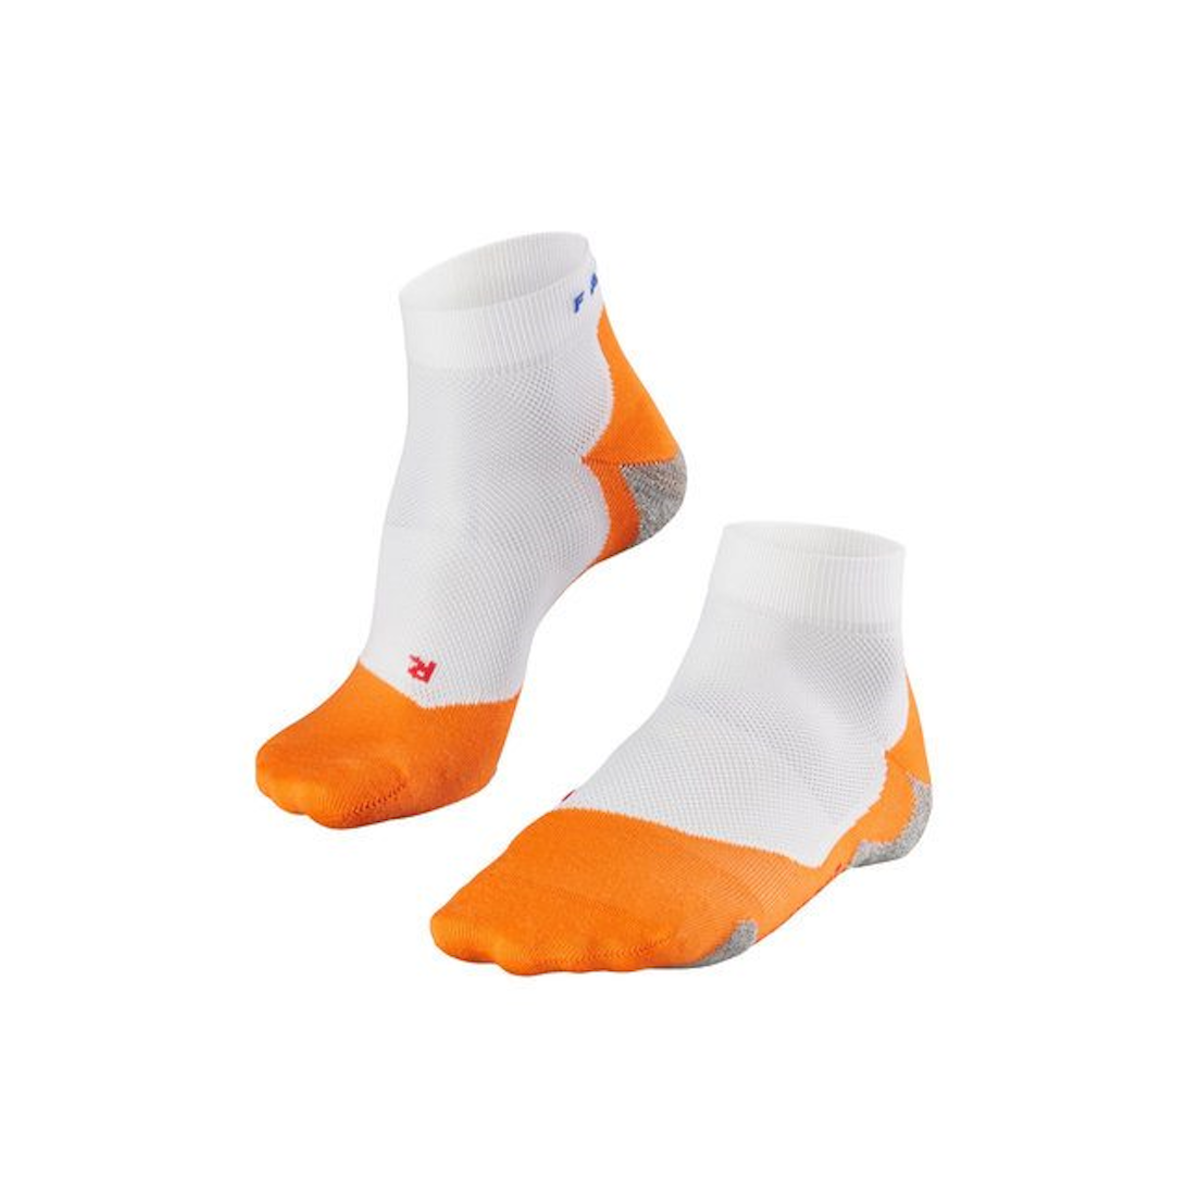 FALKE RU5 SHORT socks - orange/white